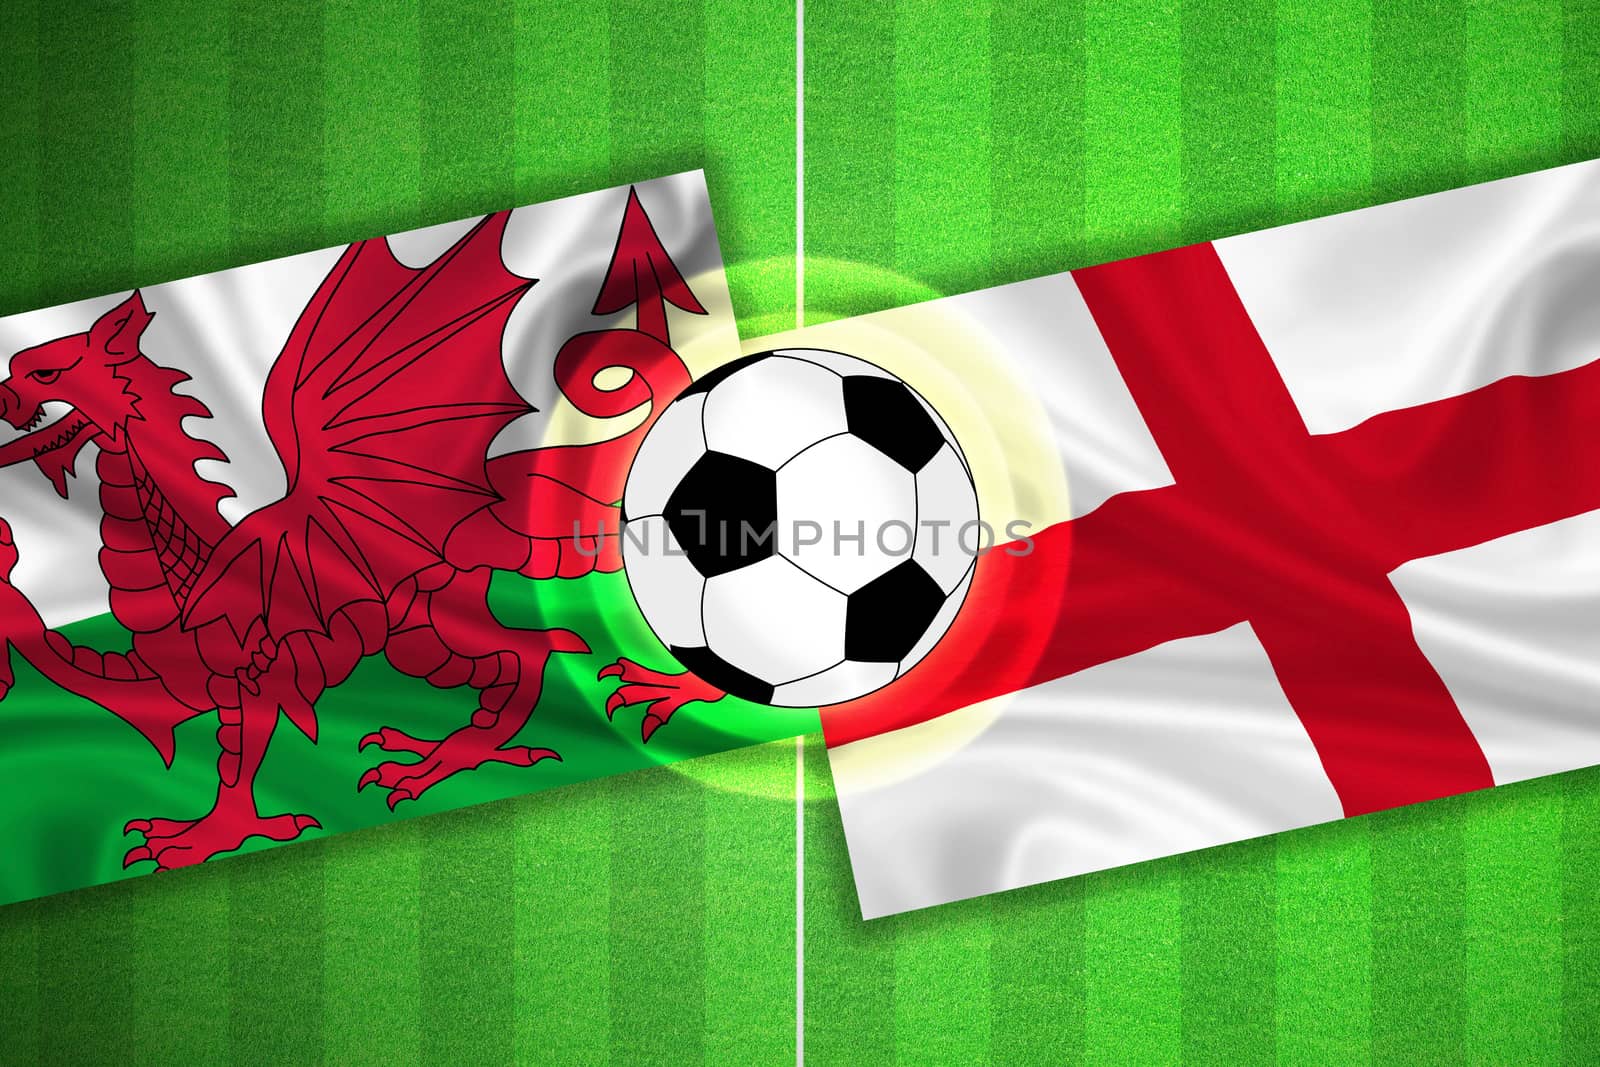 Wales - England - Soccer field with ball by aldorado